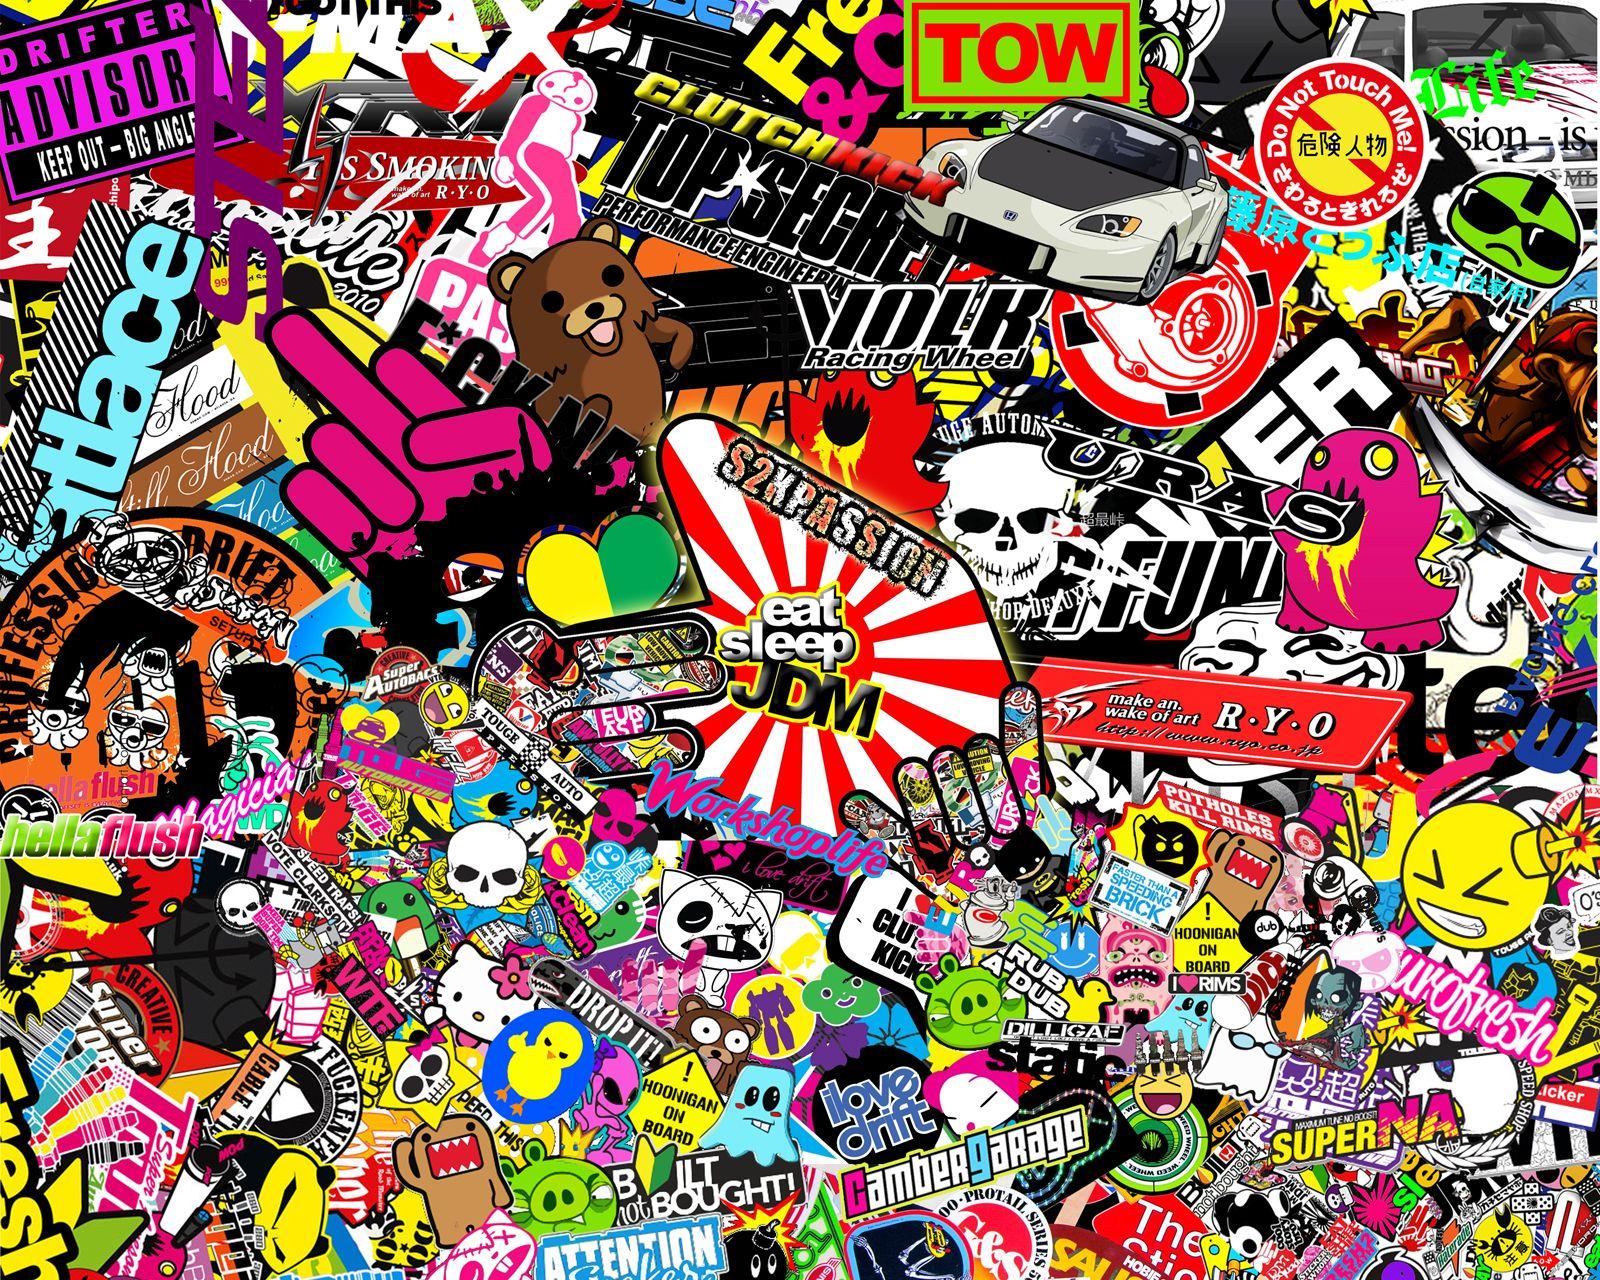 Sticker bomb wallpaper on Pinterest